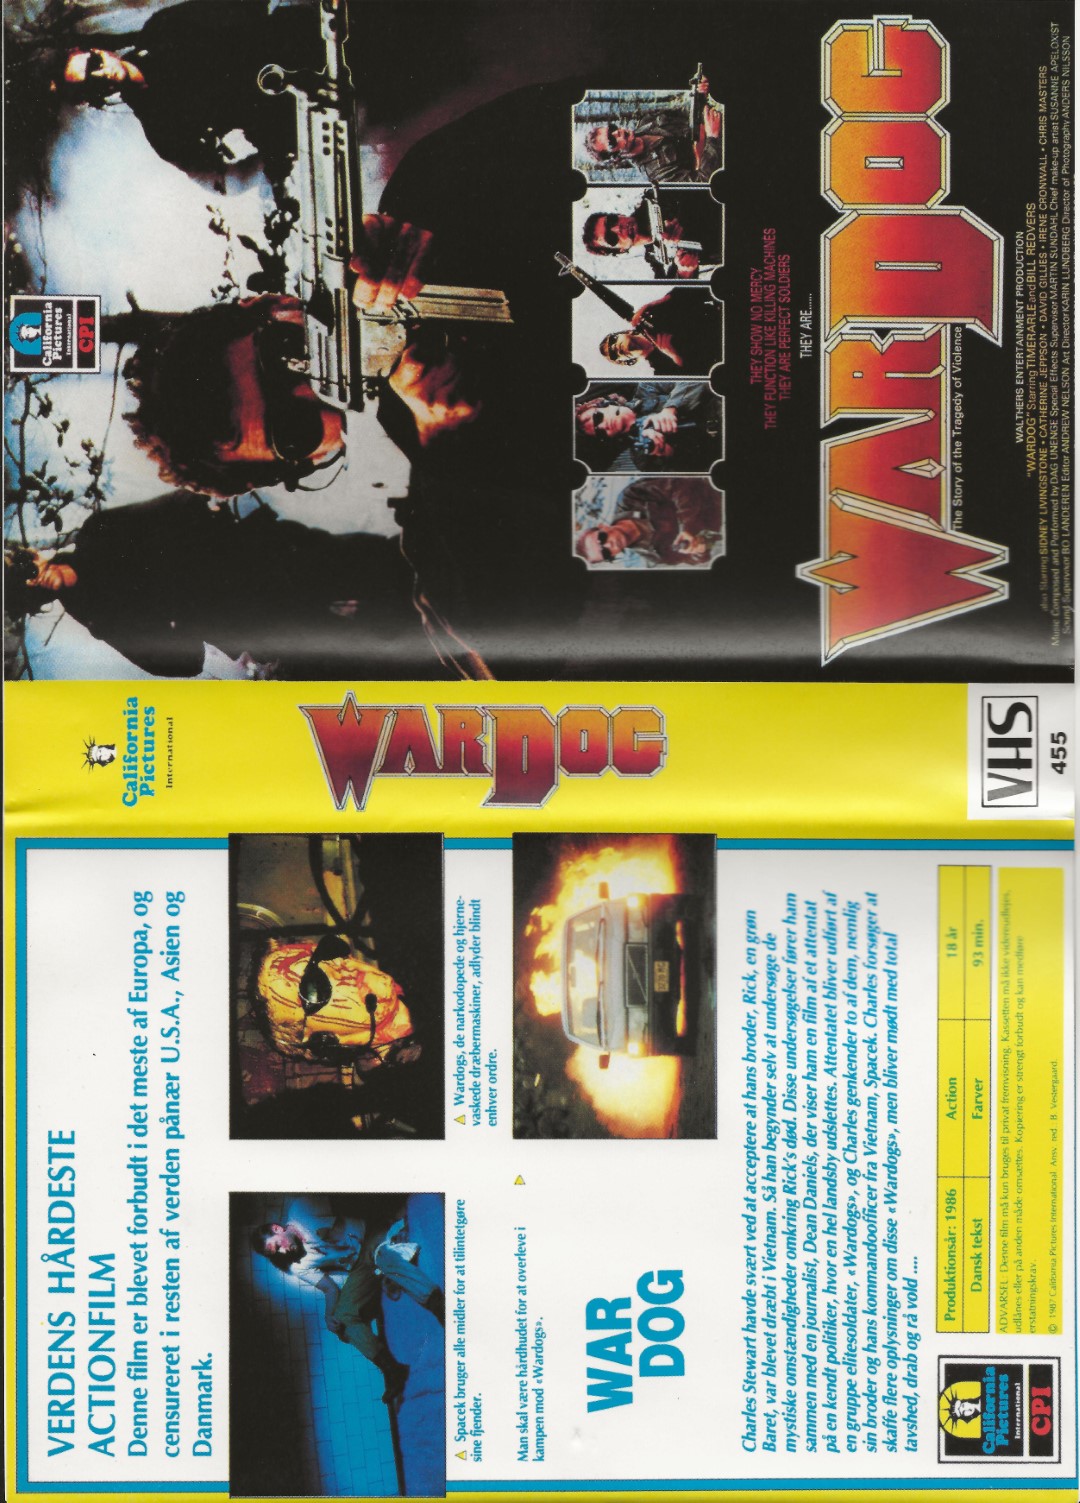 War Dog  VHS Filmlab 1987